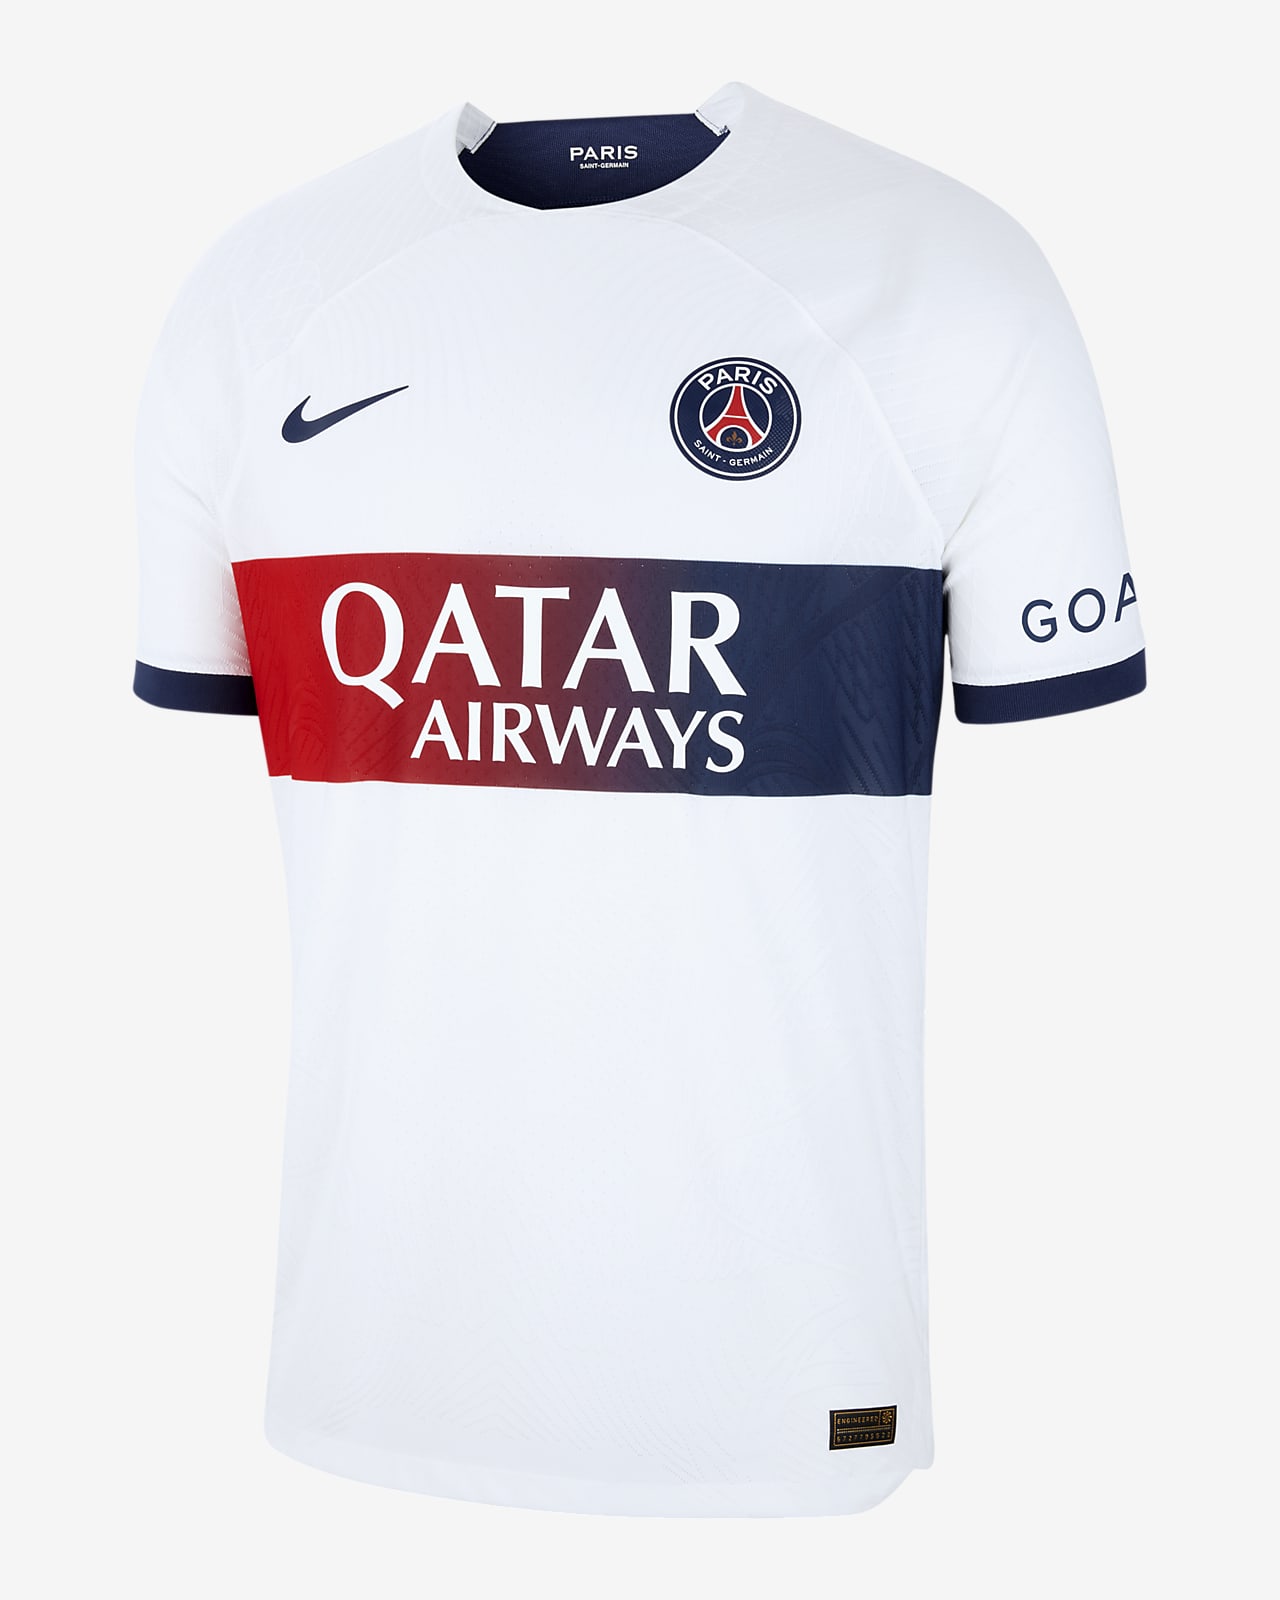 Paris Saint-Germain 2023/24 Match Home Men's Nike Dri-FIT ADV Football Shirt